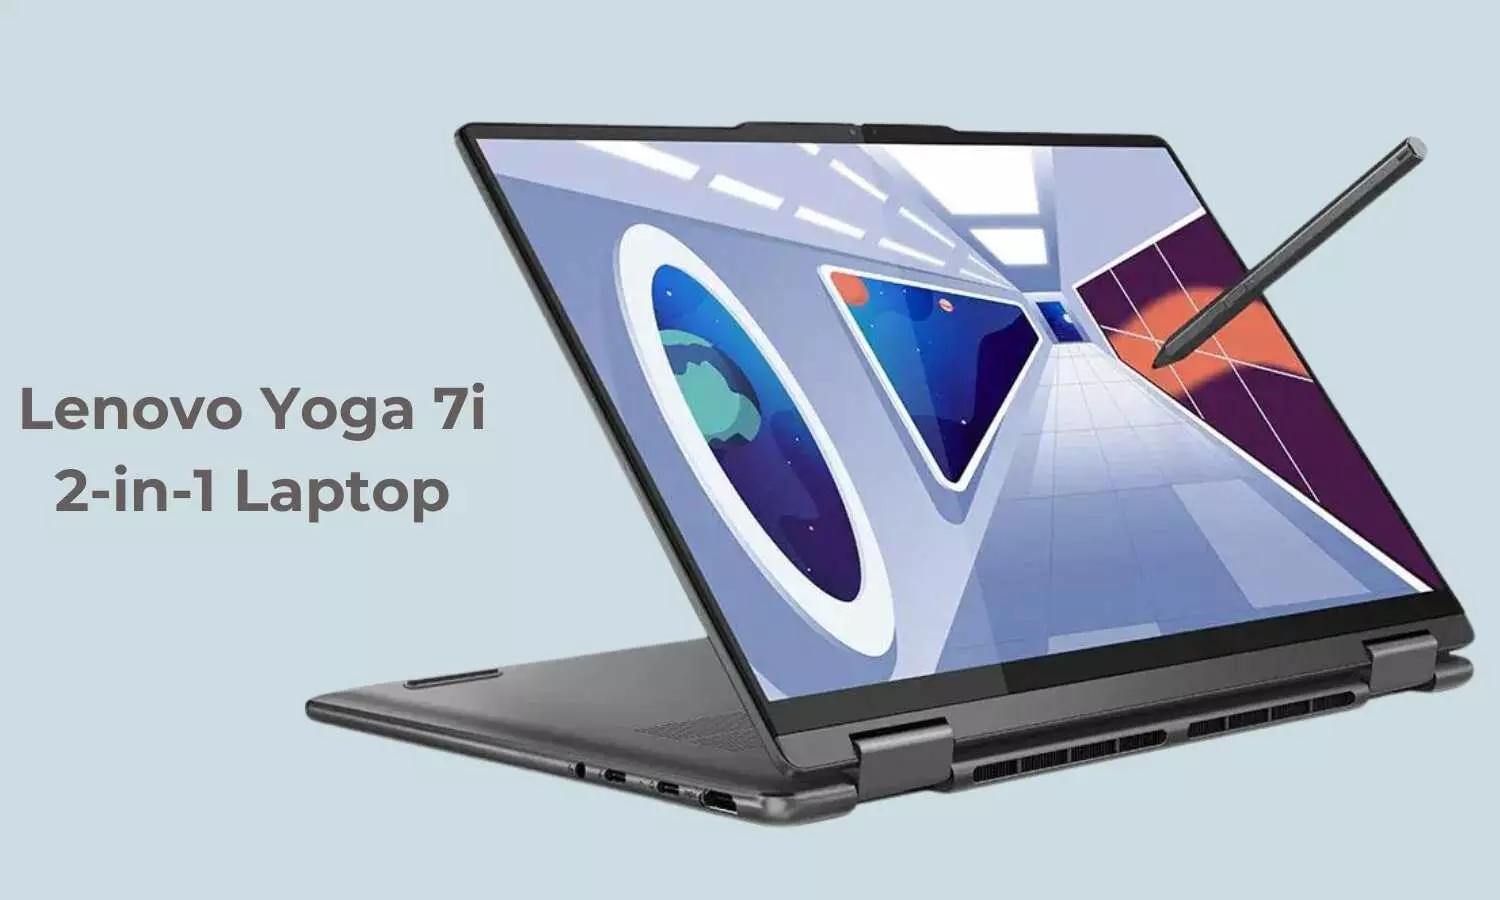 Lenovo Yoga 7i 2-in-1 Laptop: Redefining portable computing in India